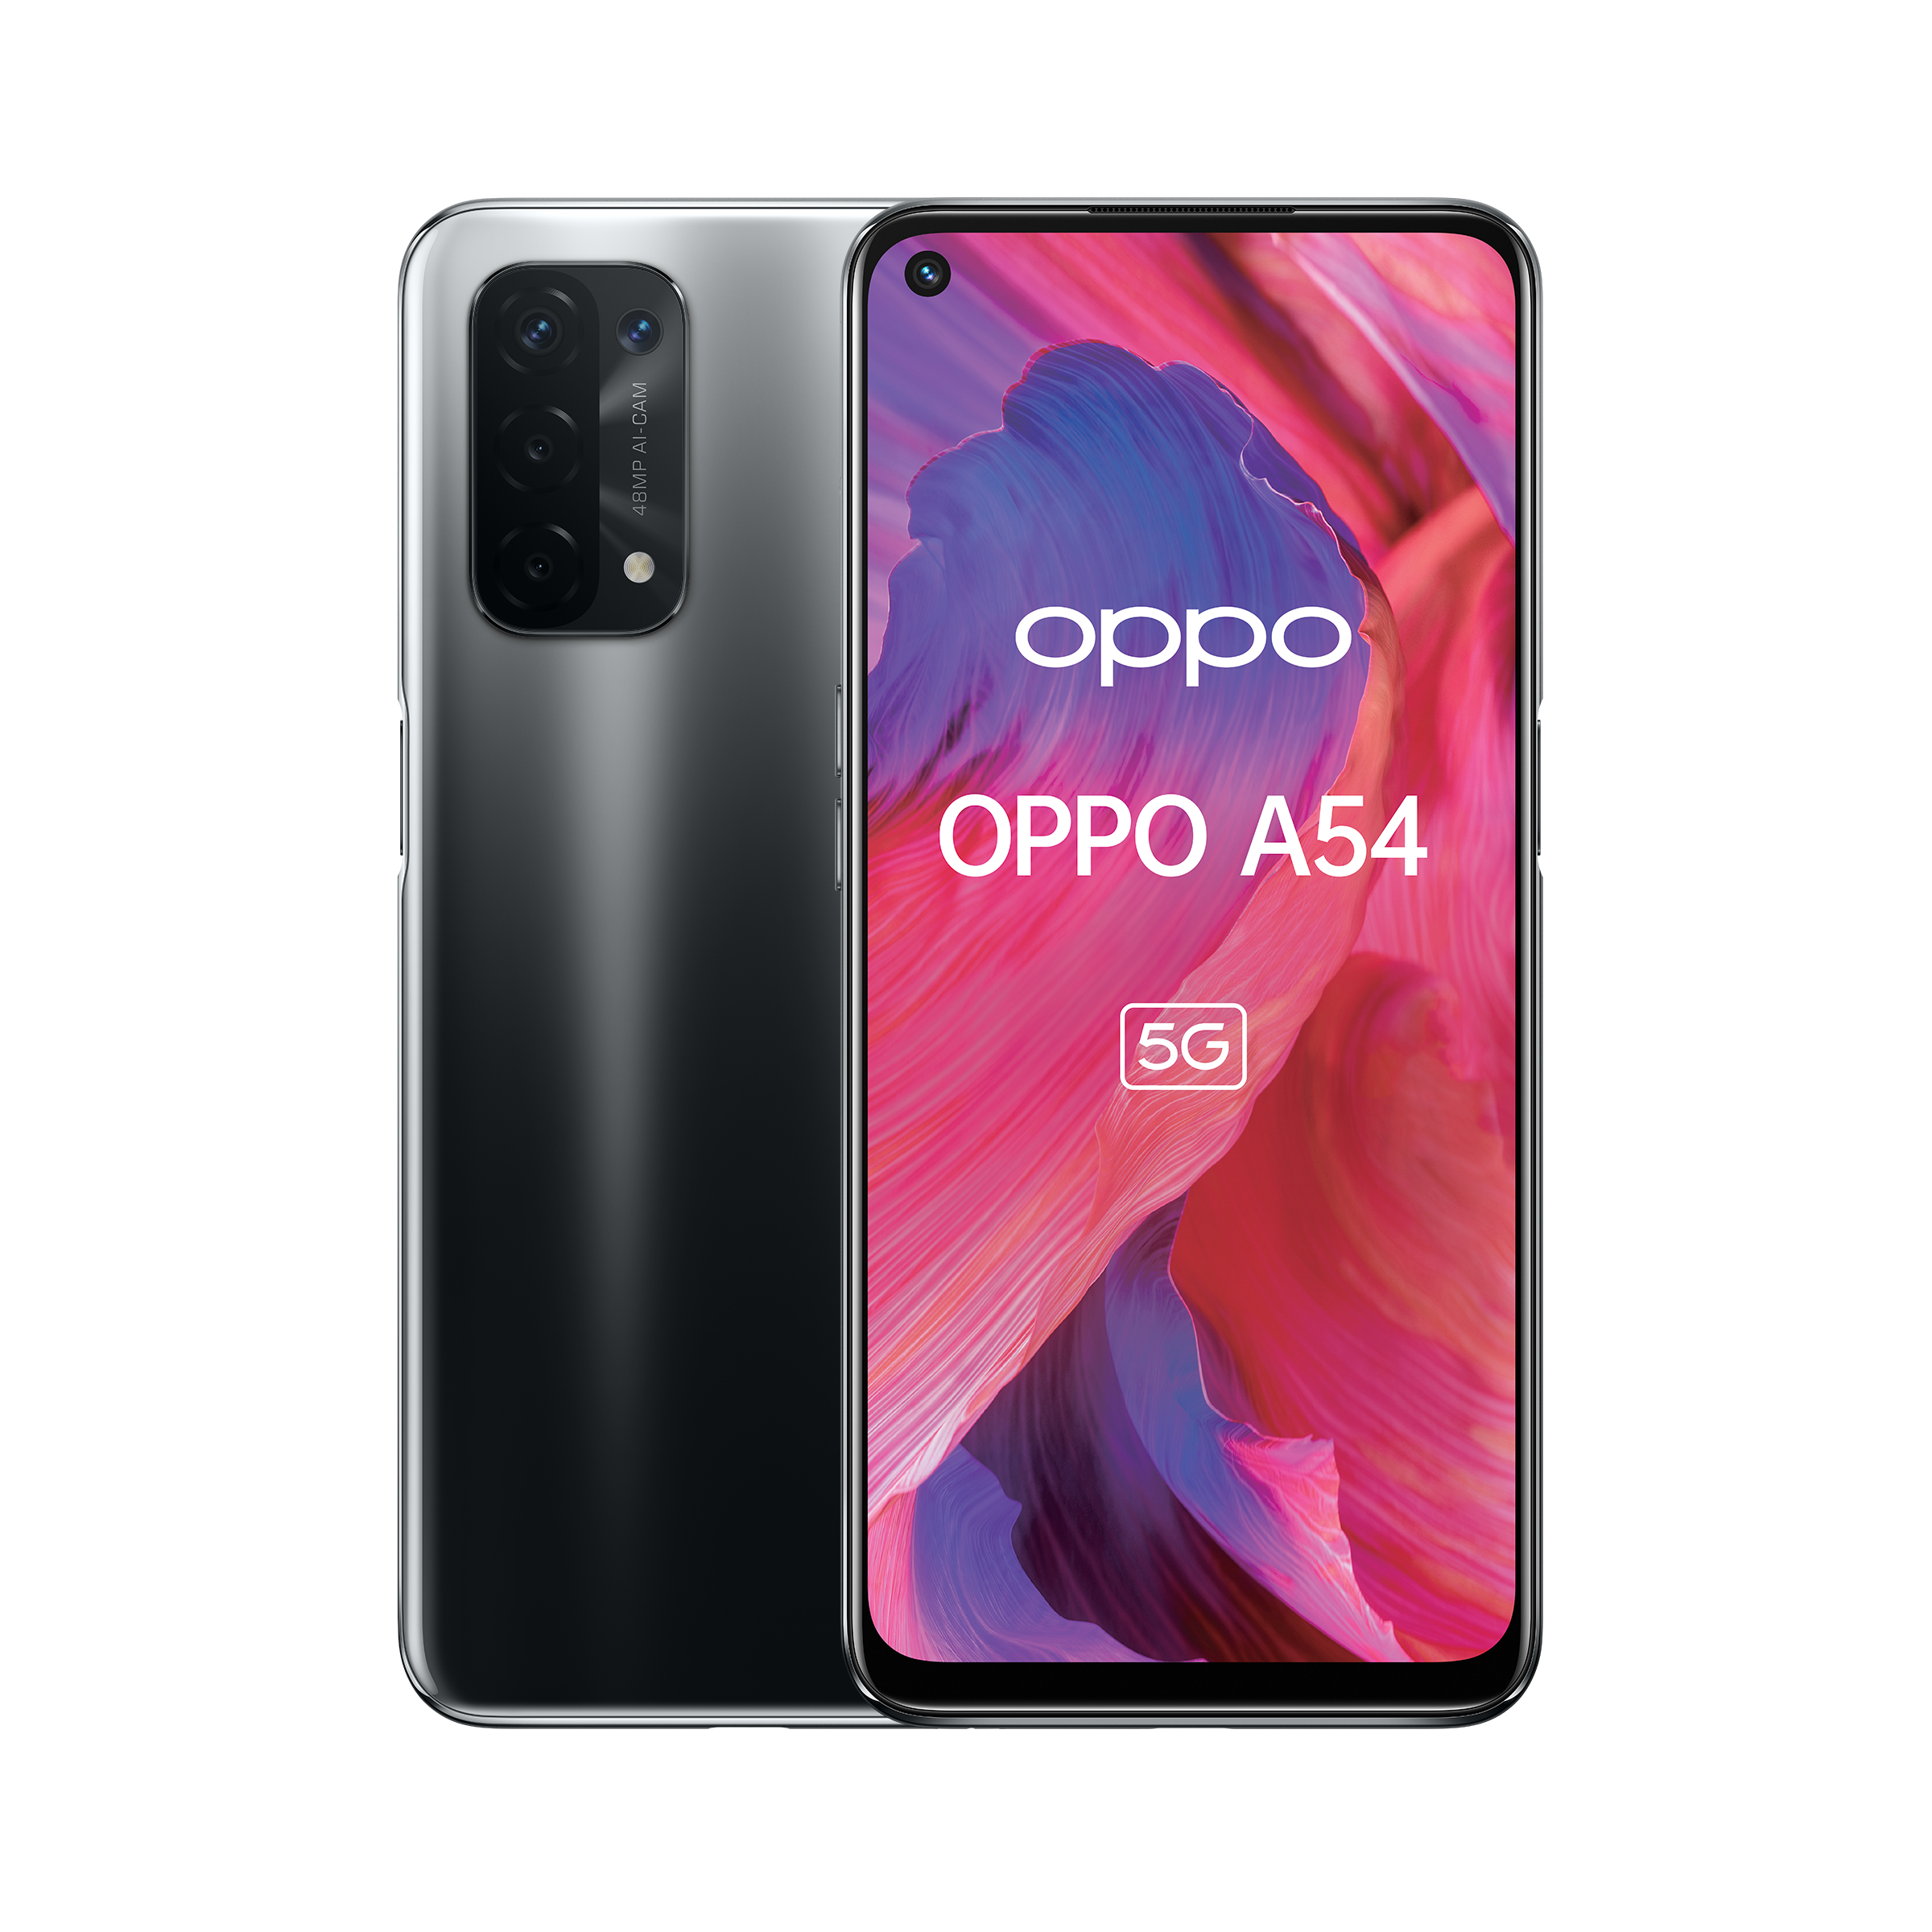 OPPO A54 5G A54 Smartphone 5G, 193g, Display 6.5" FHD+ 90Hz, 4